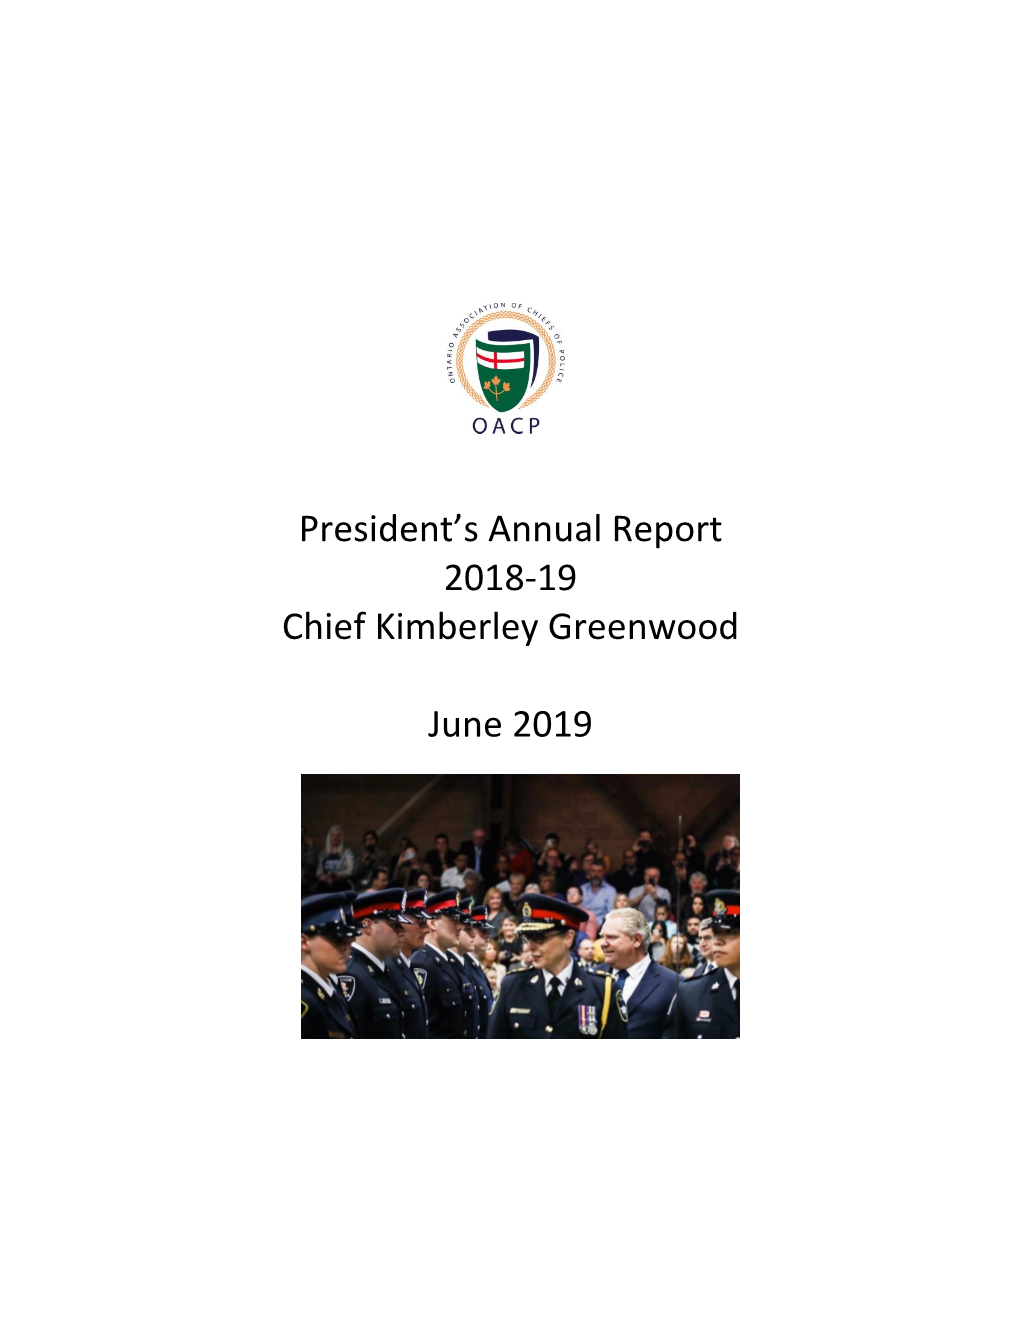 President's Annual Report 2018-19 Chief Kimberley Greenwood June 2019